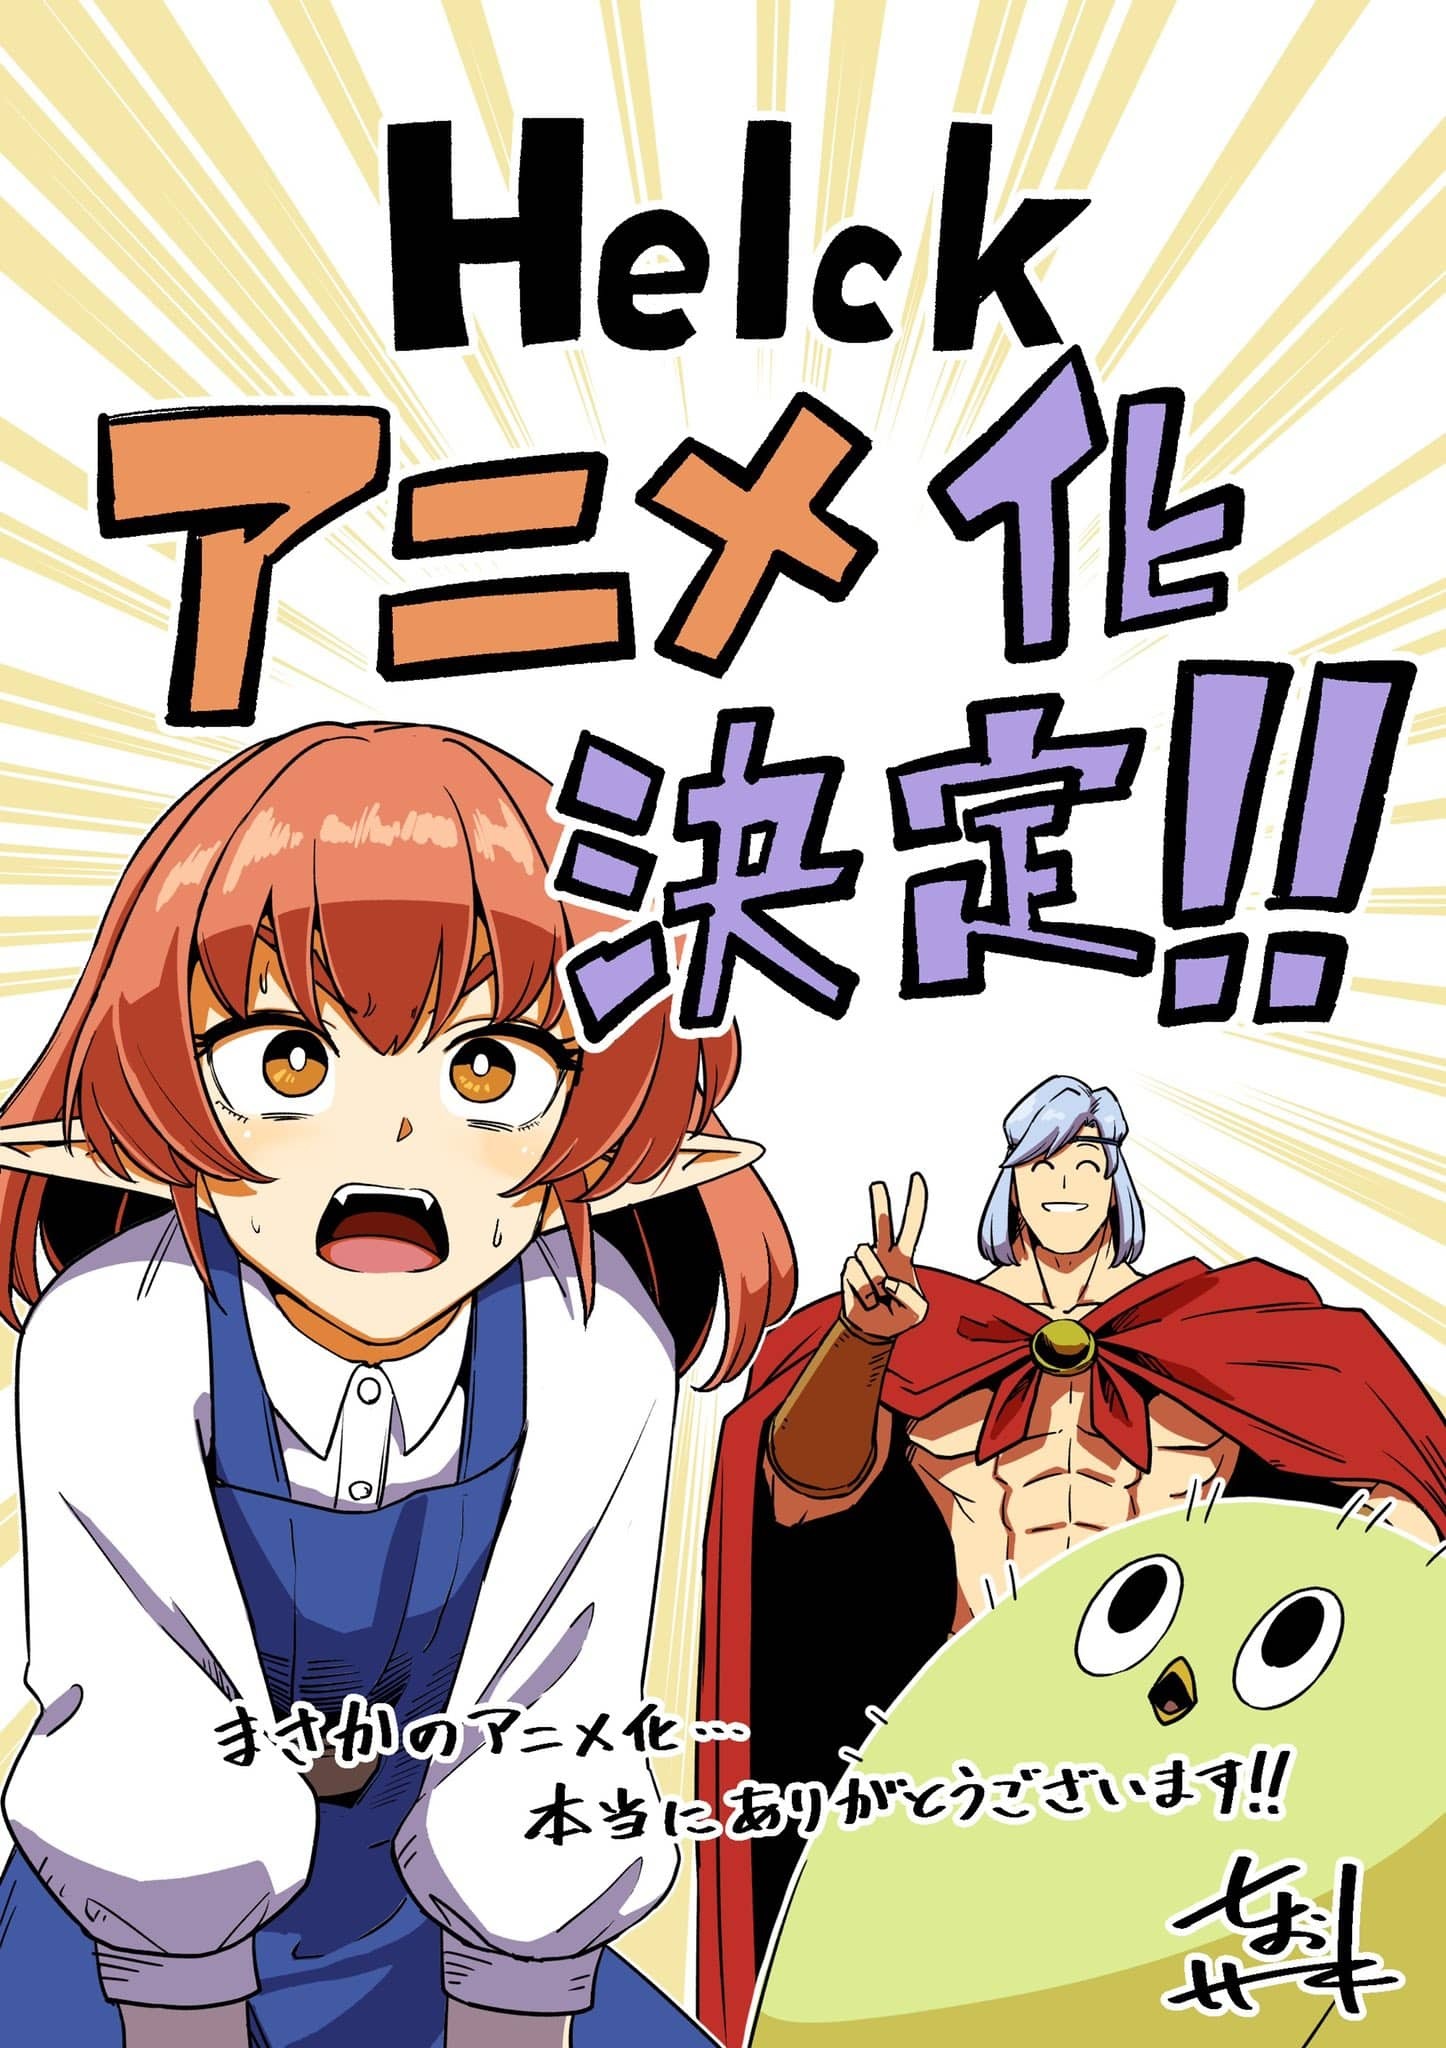 Helck Anime Release Date, Trailer, Cast, Reveals